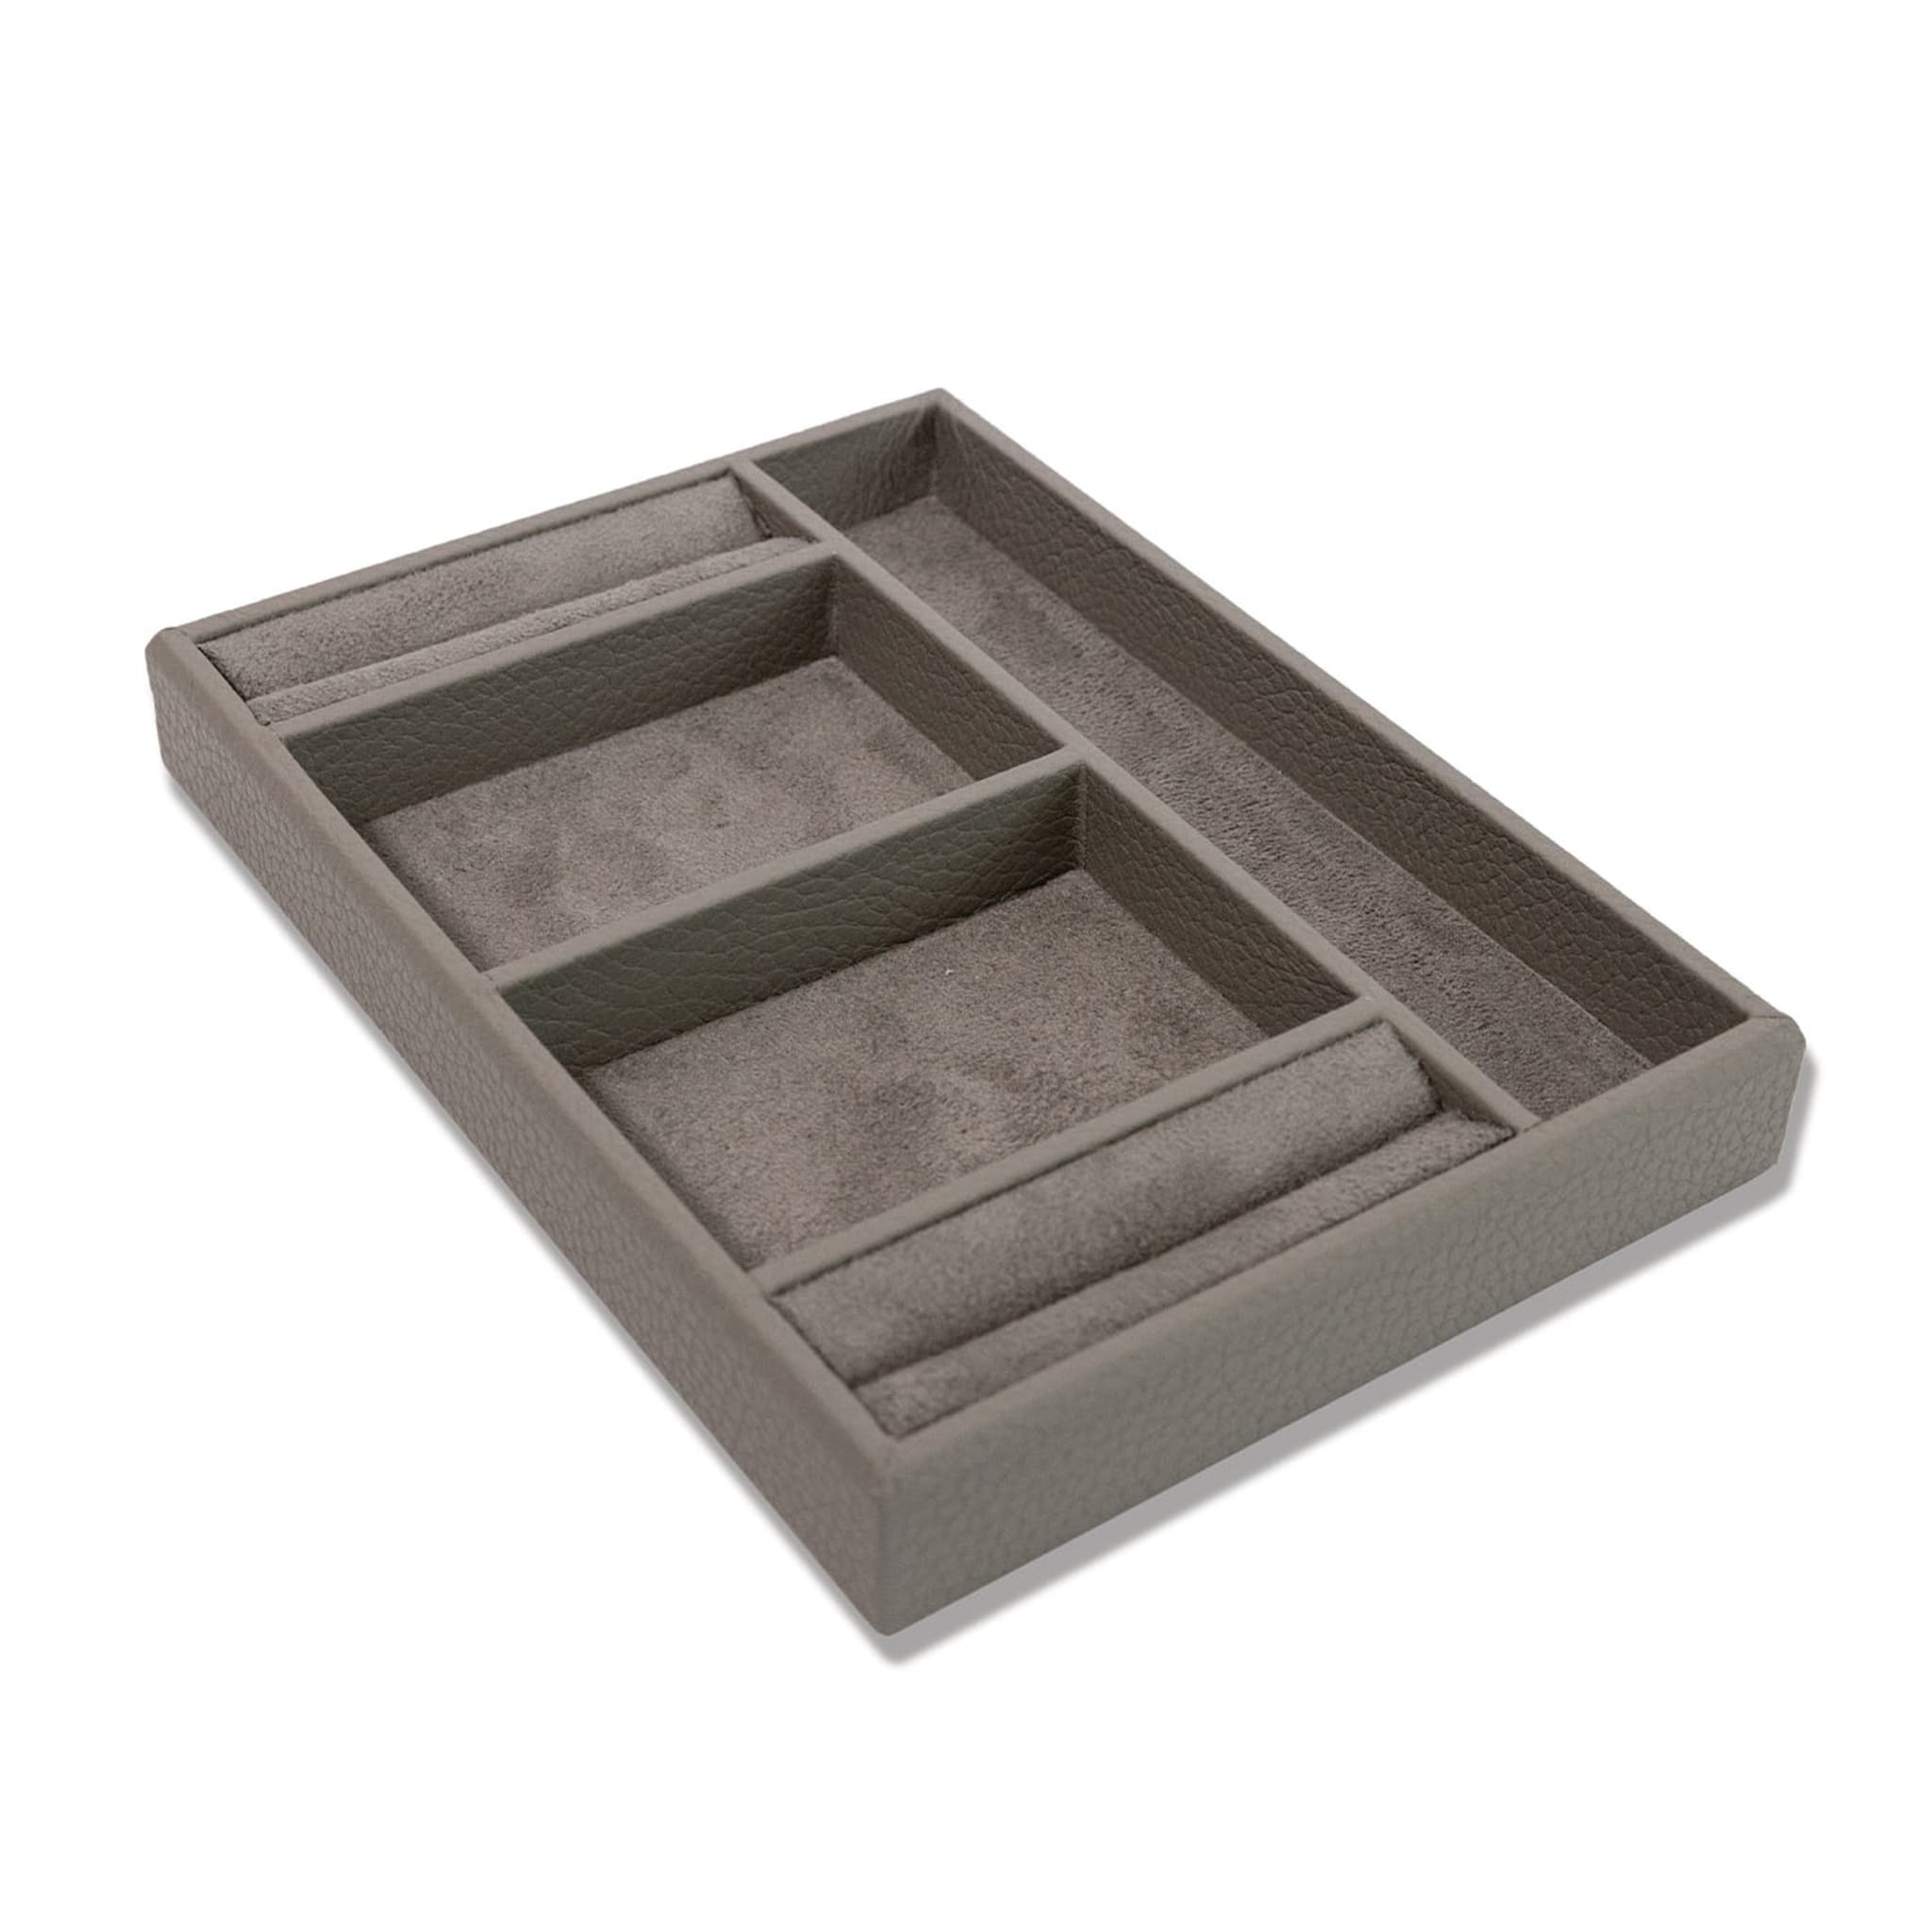 Safety Box Luna Gray Small Tray  - Alternative view 1